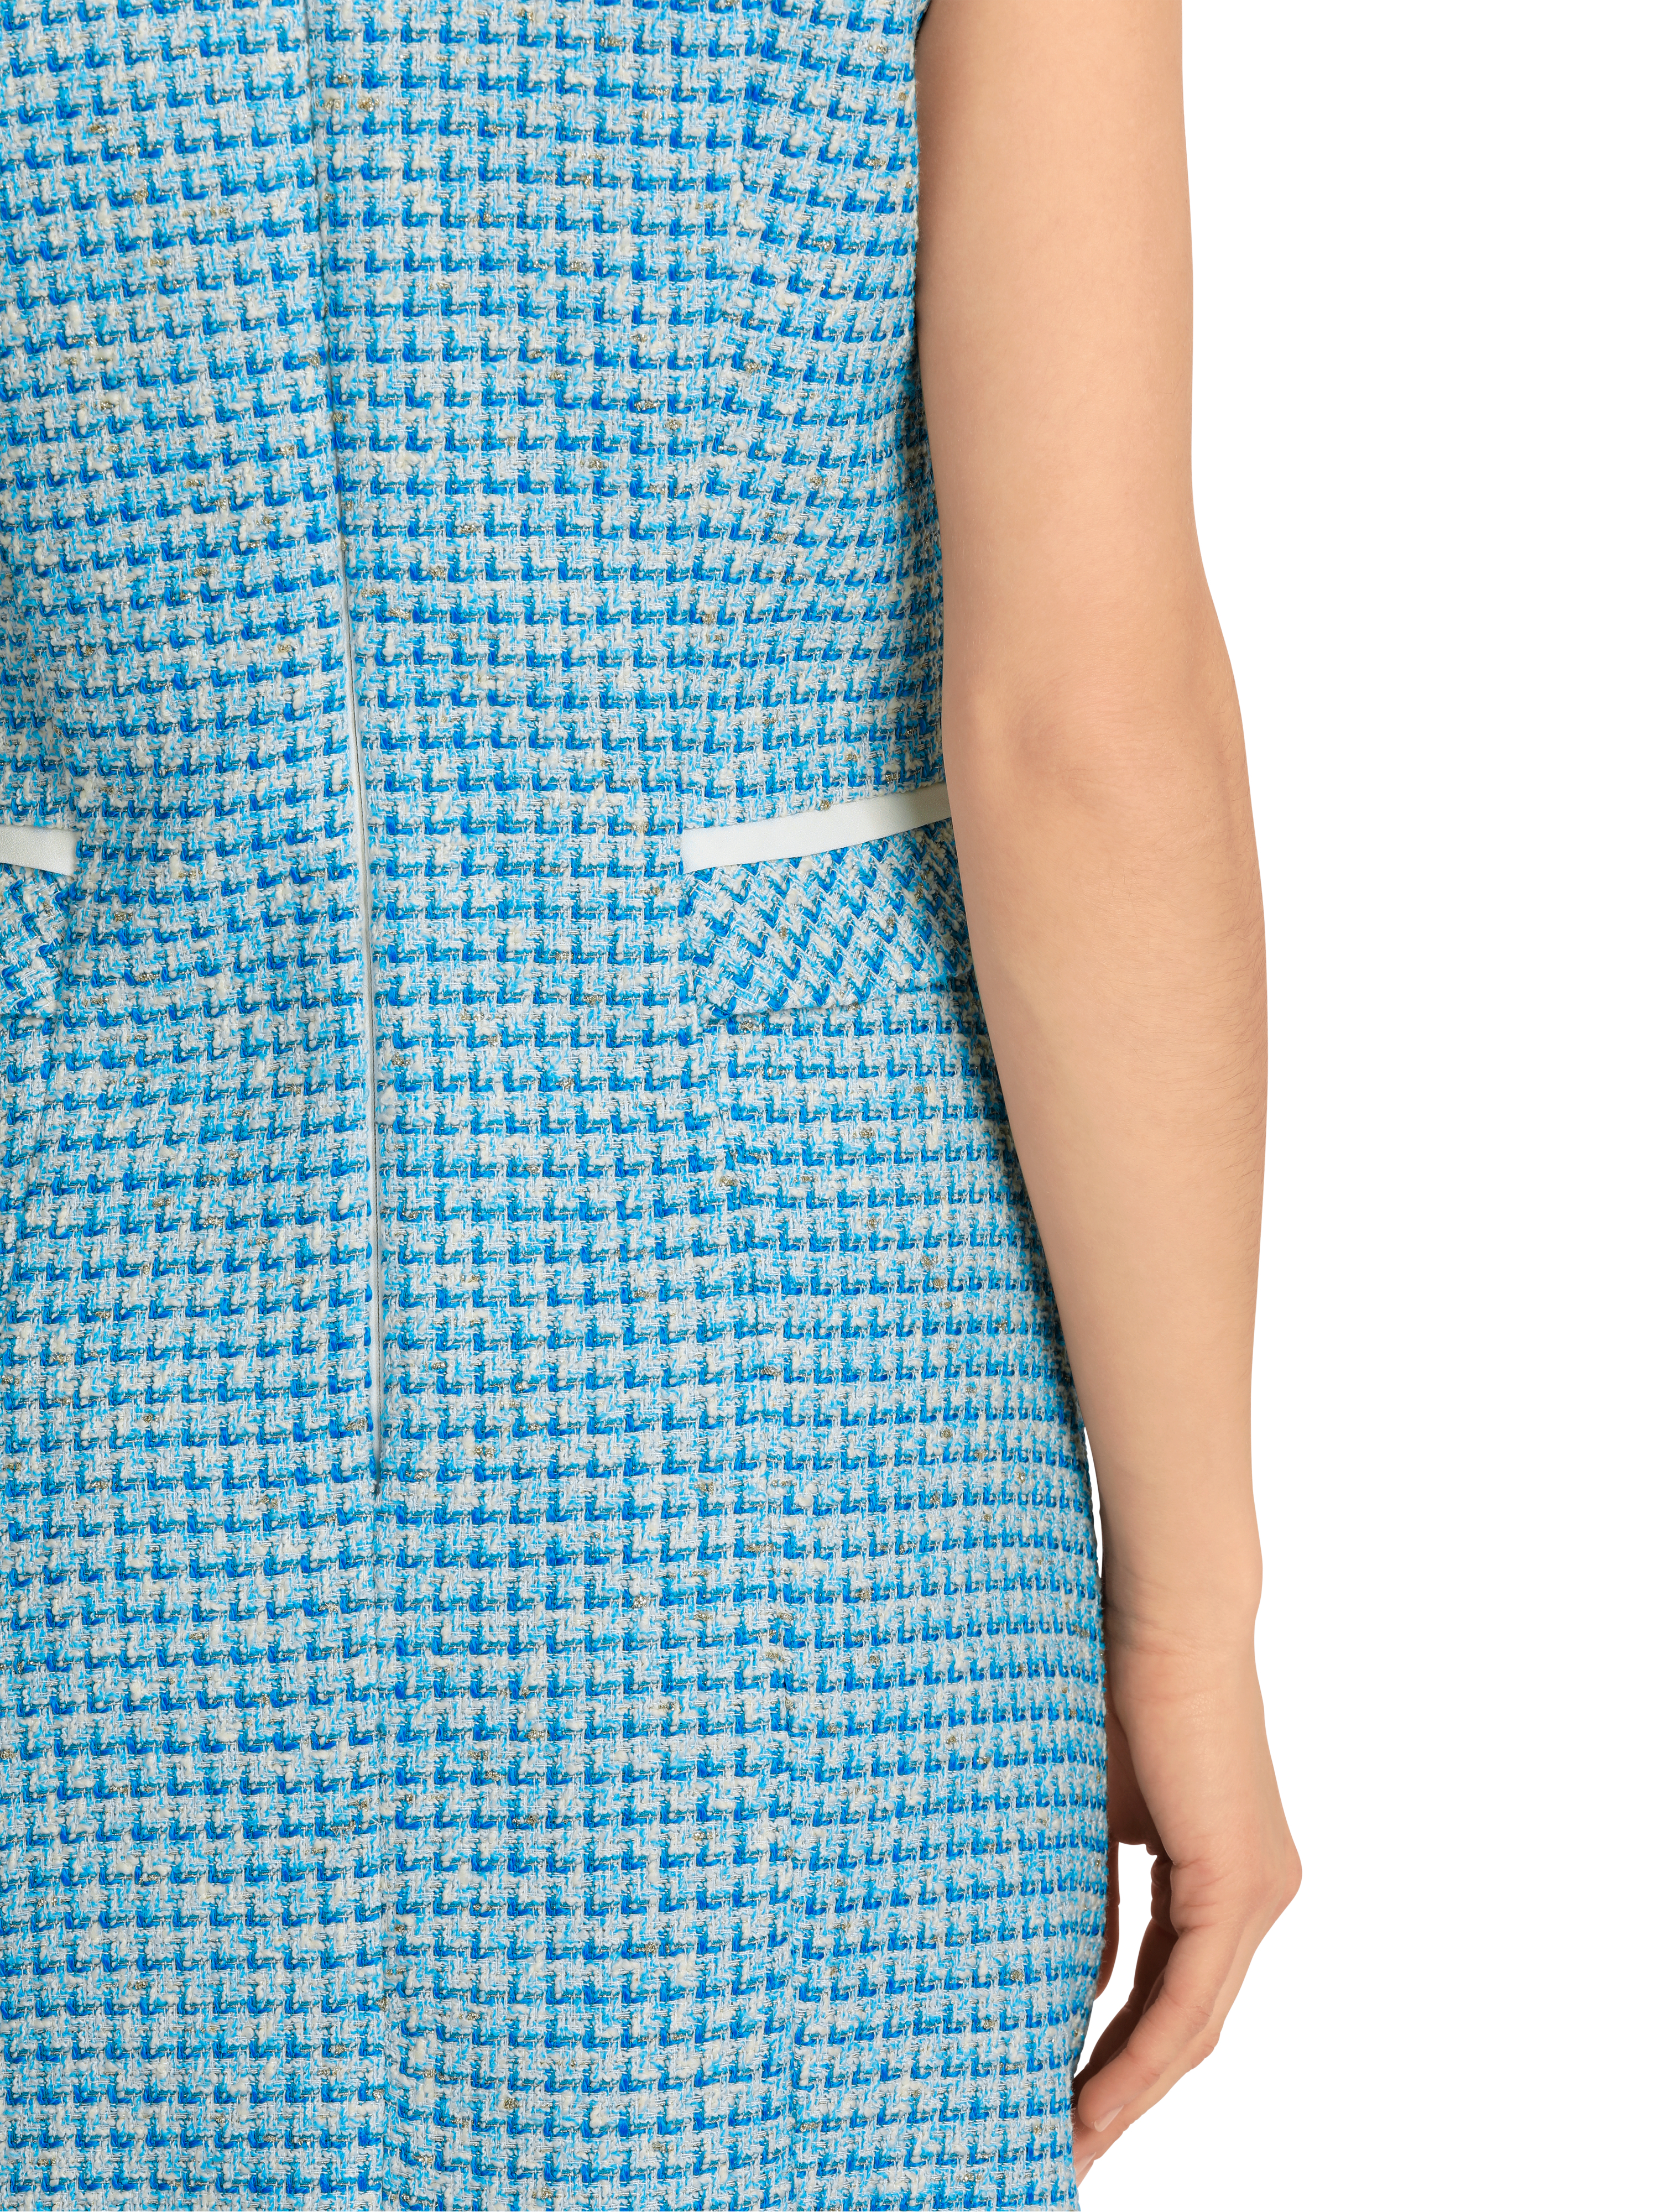 MARC CAIN WC 21.67 W88 Kurzärmliges Kleid mit Karos blau light azure